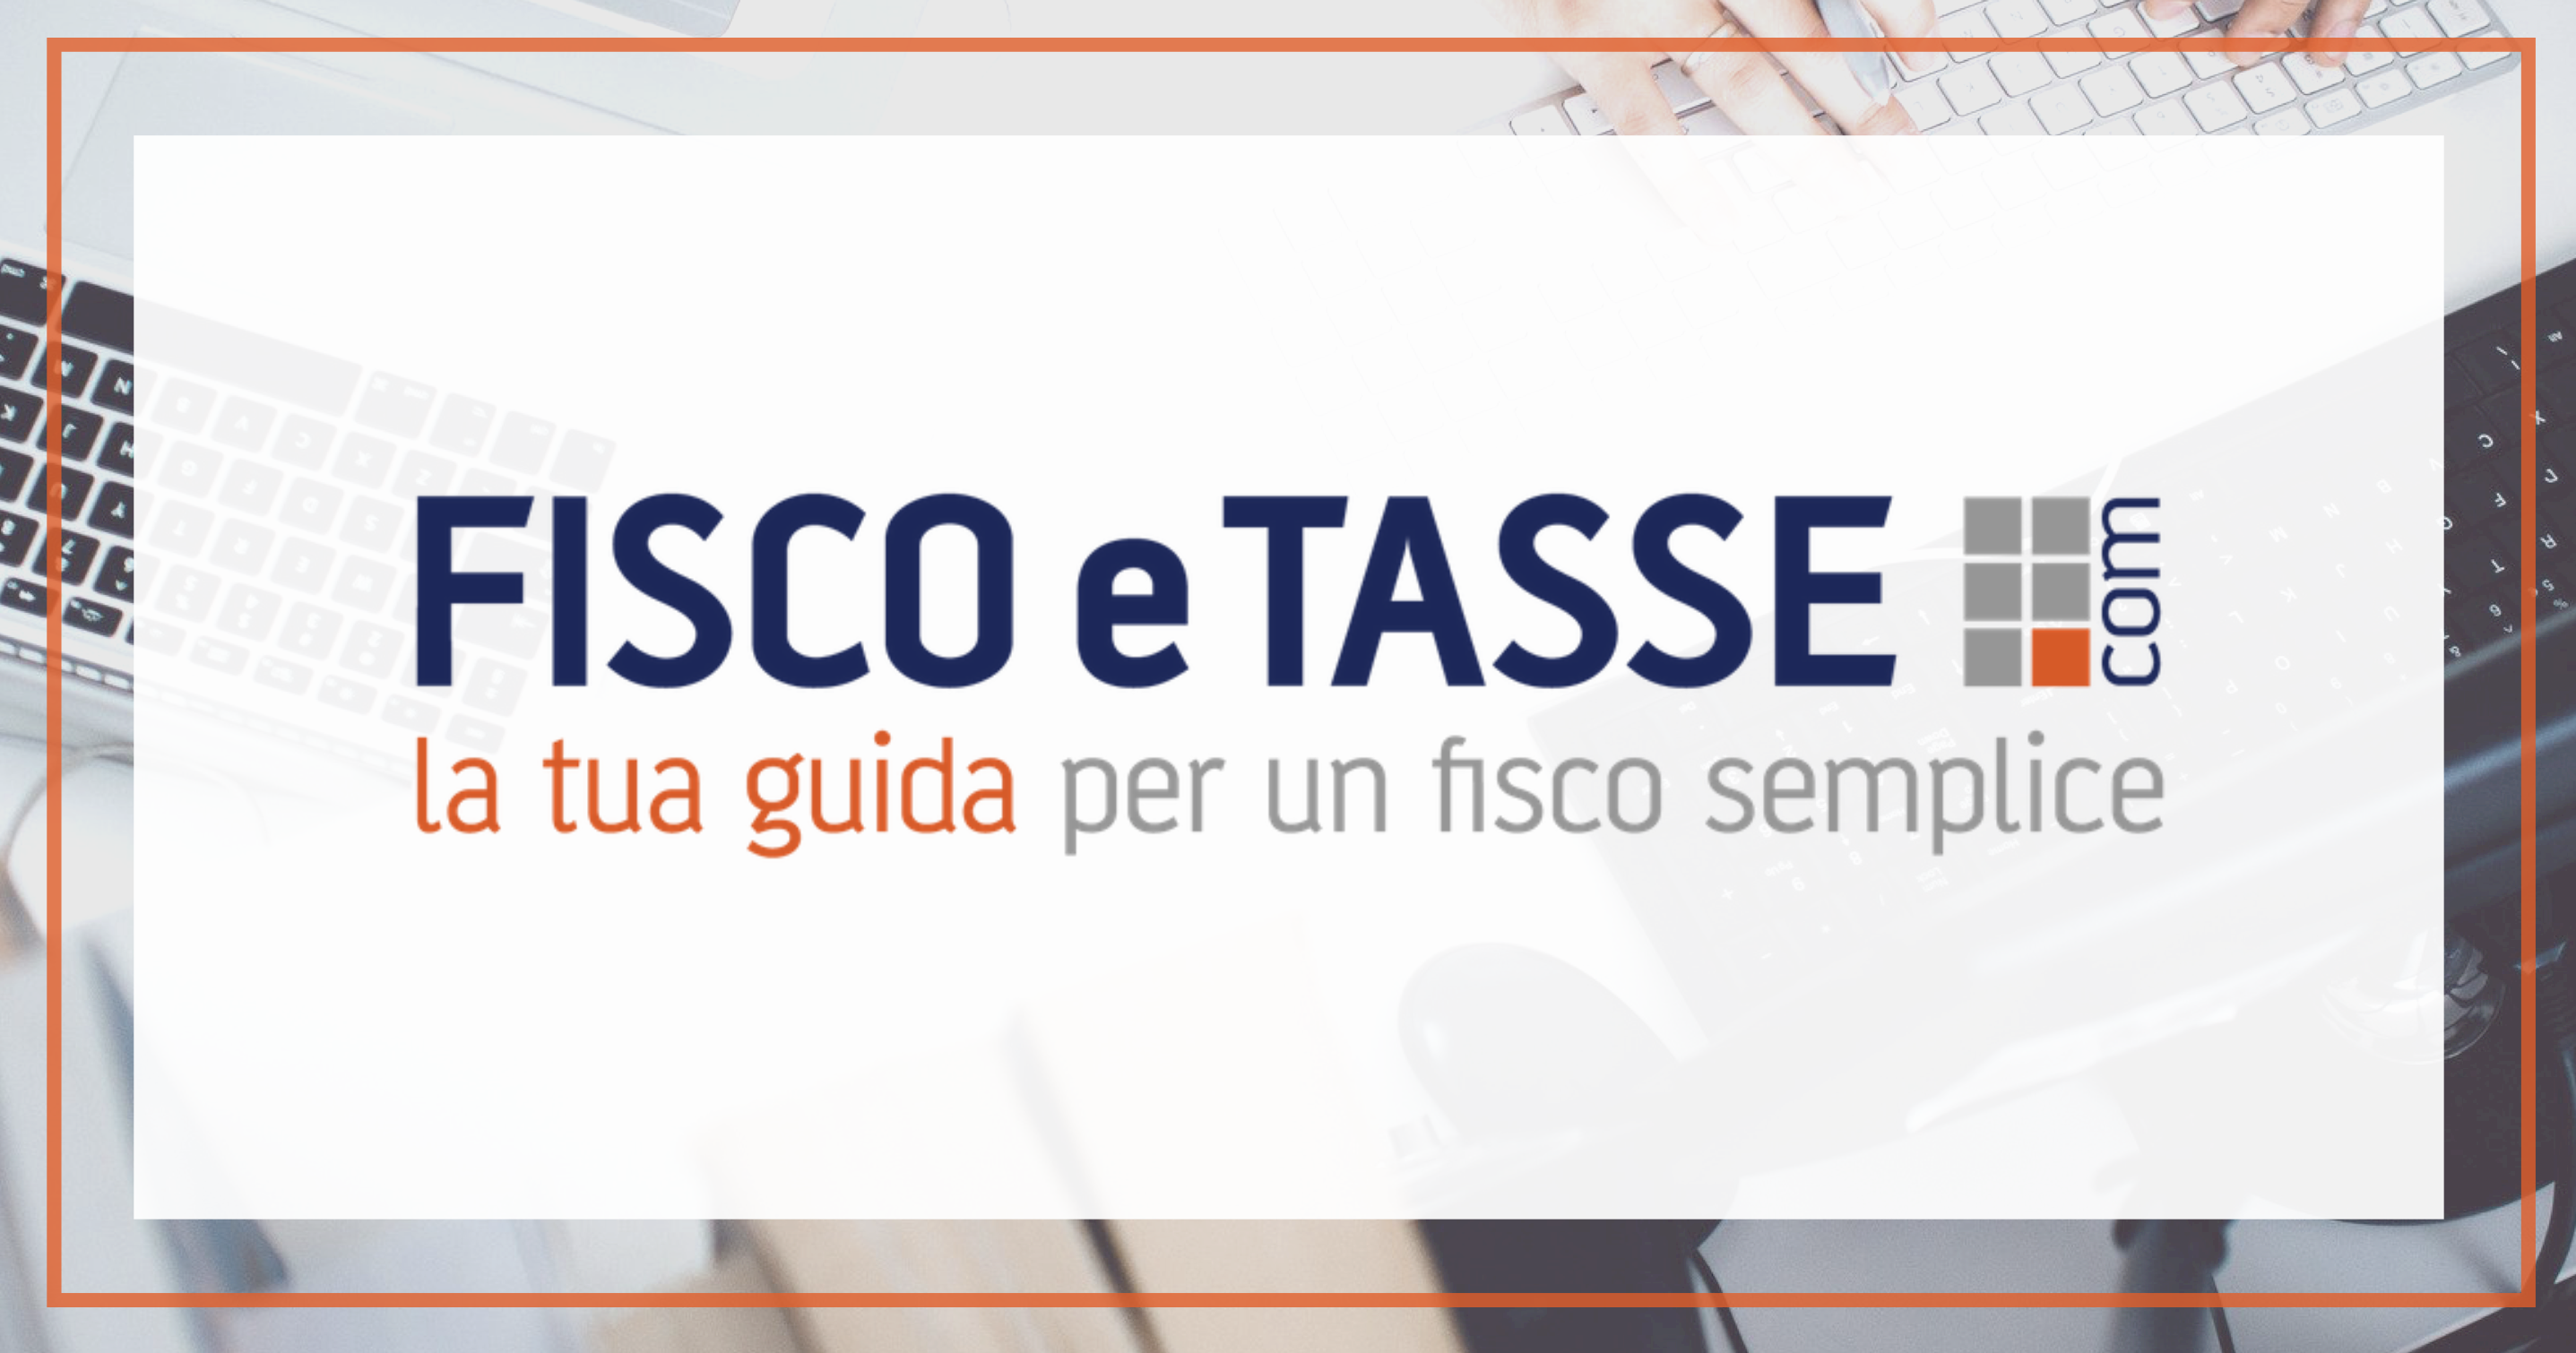 www.fiscoetasse.com